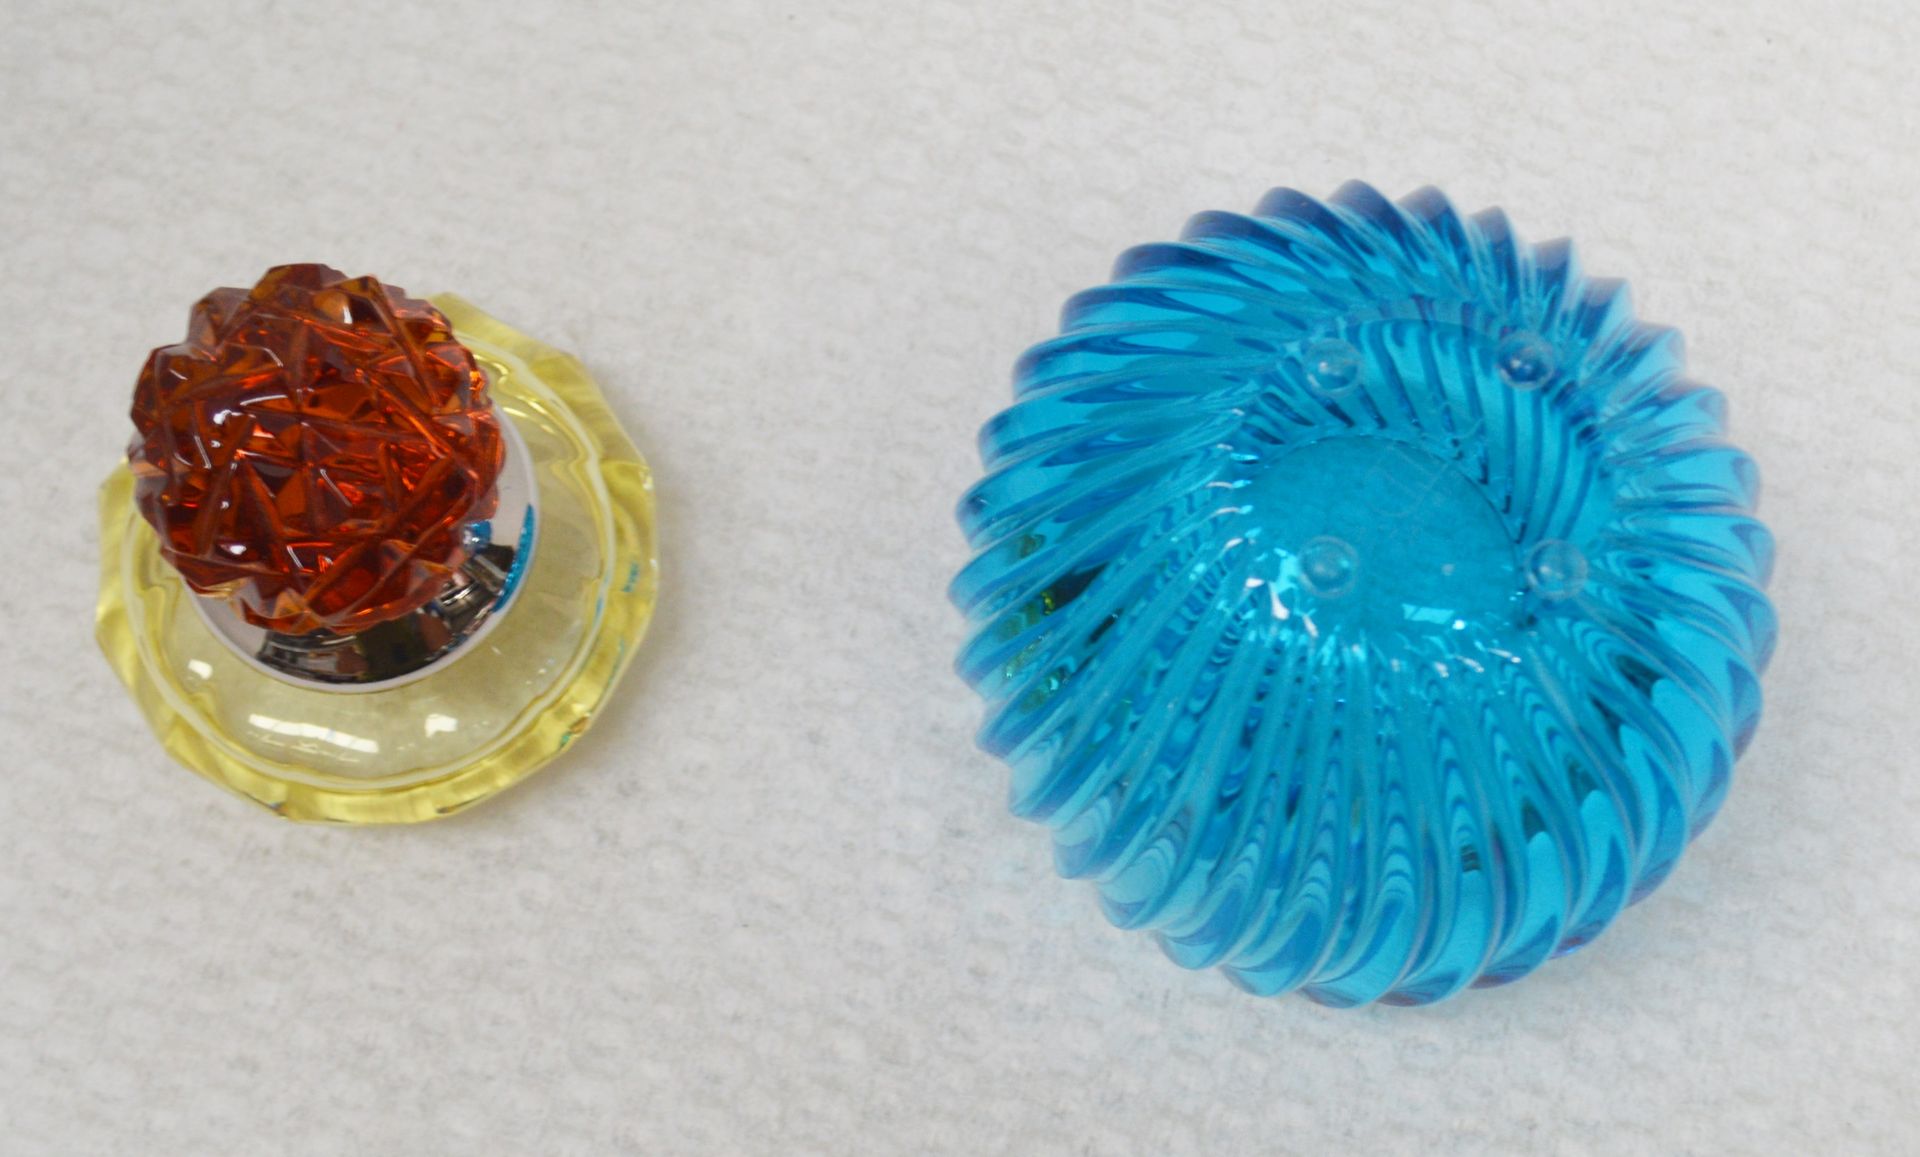 1 x BALDI 'Home Jewels' Italian Hand-crafted Artisan Small Coccinella Jar **Original RRP £2.665.00** - Image 3 of 3